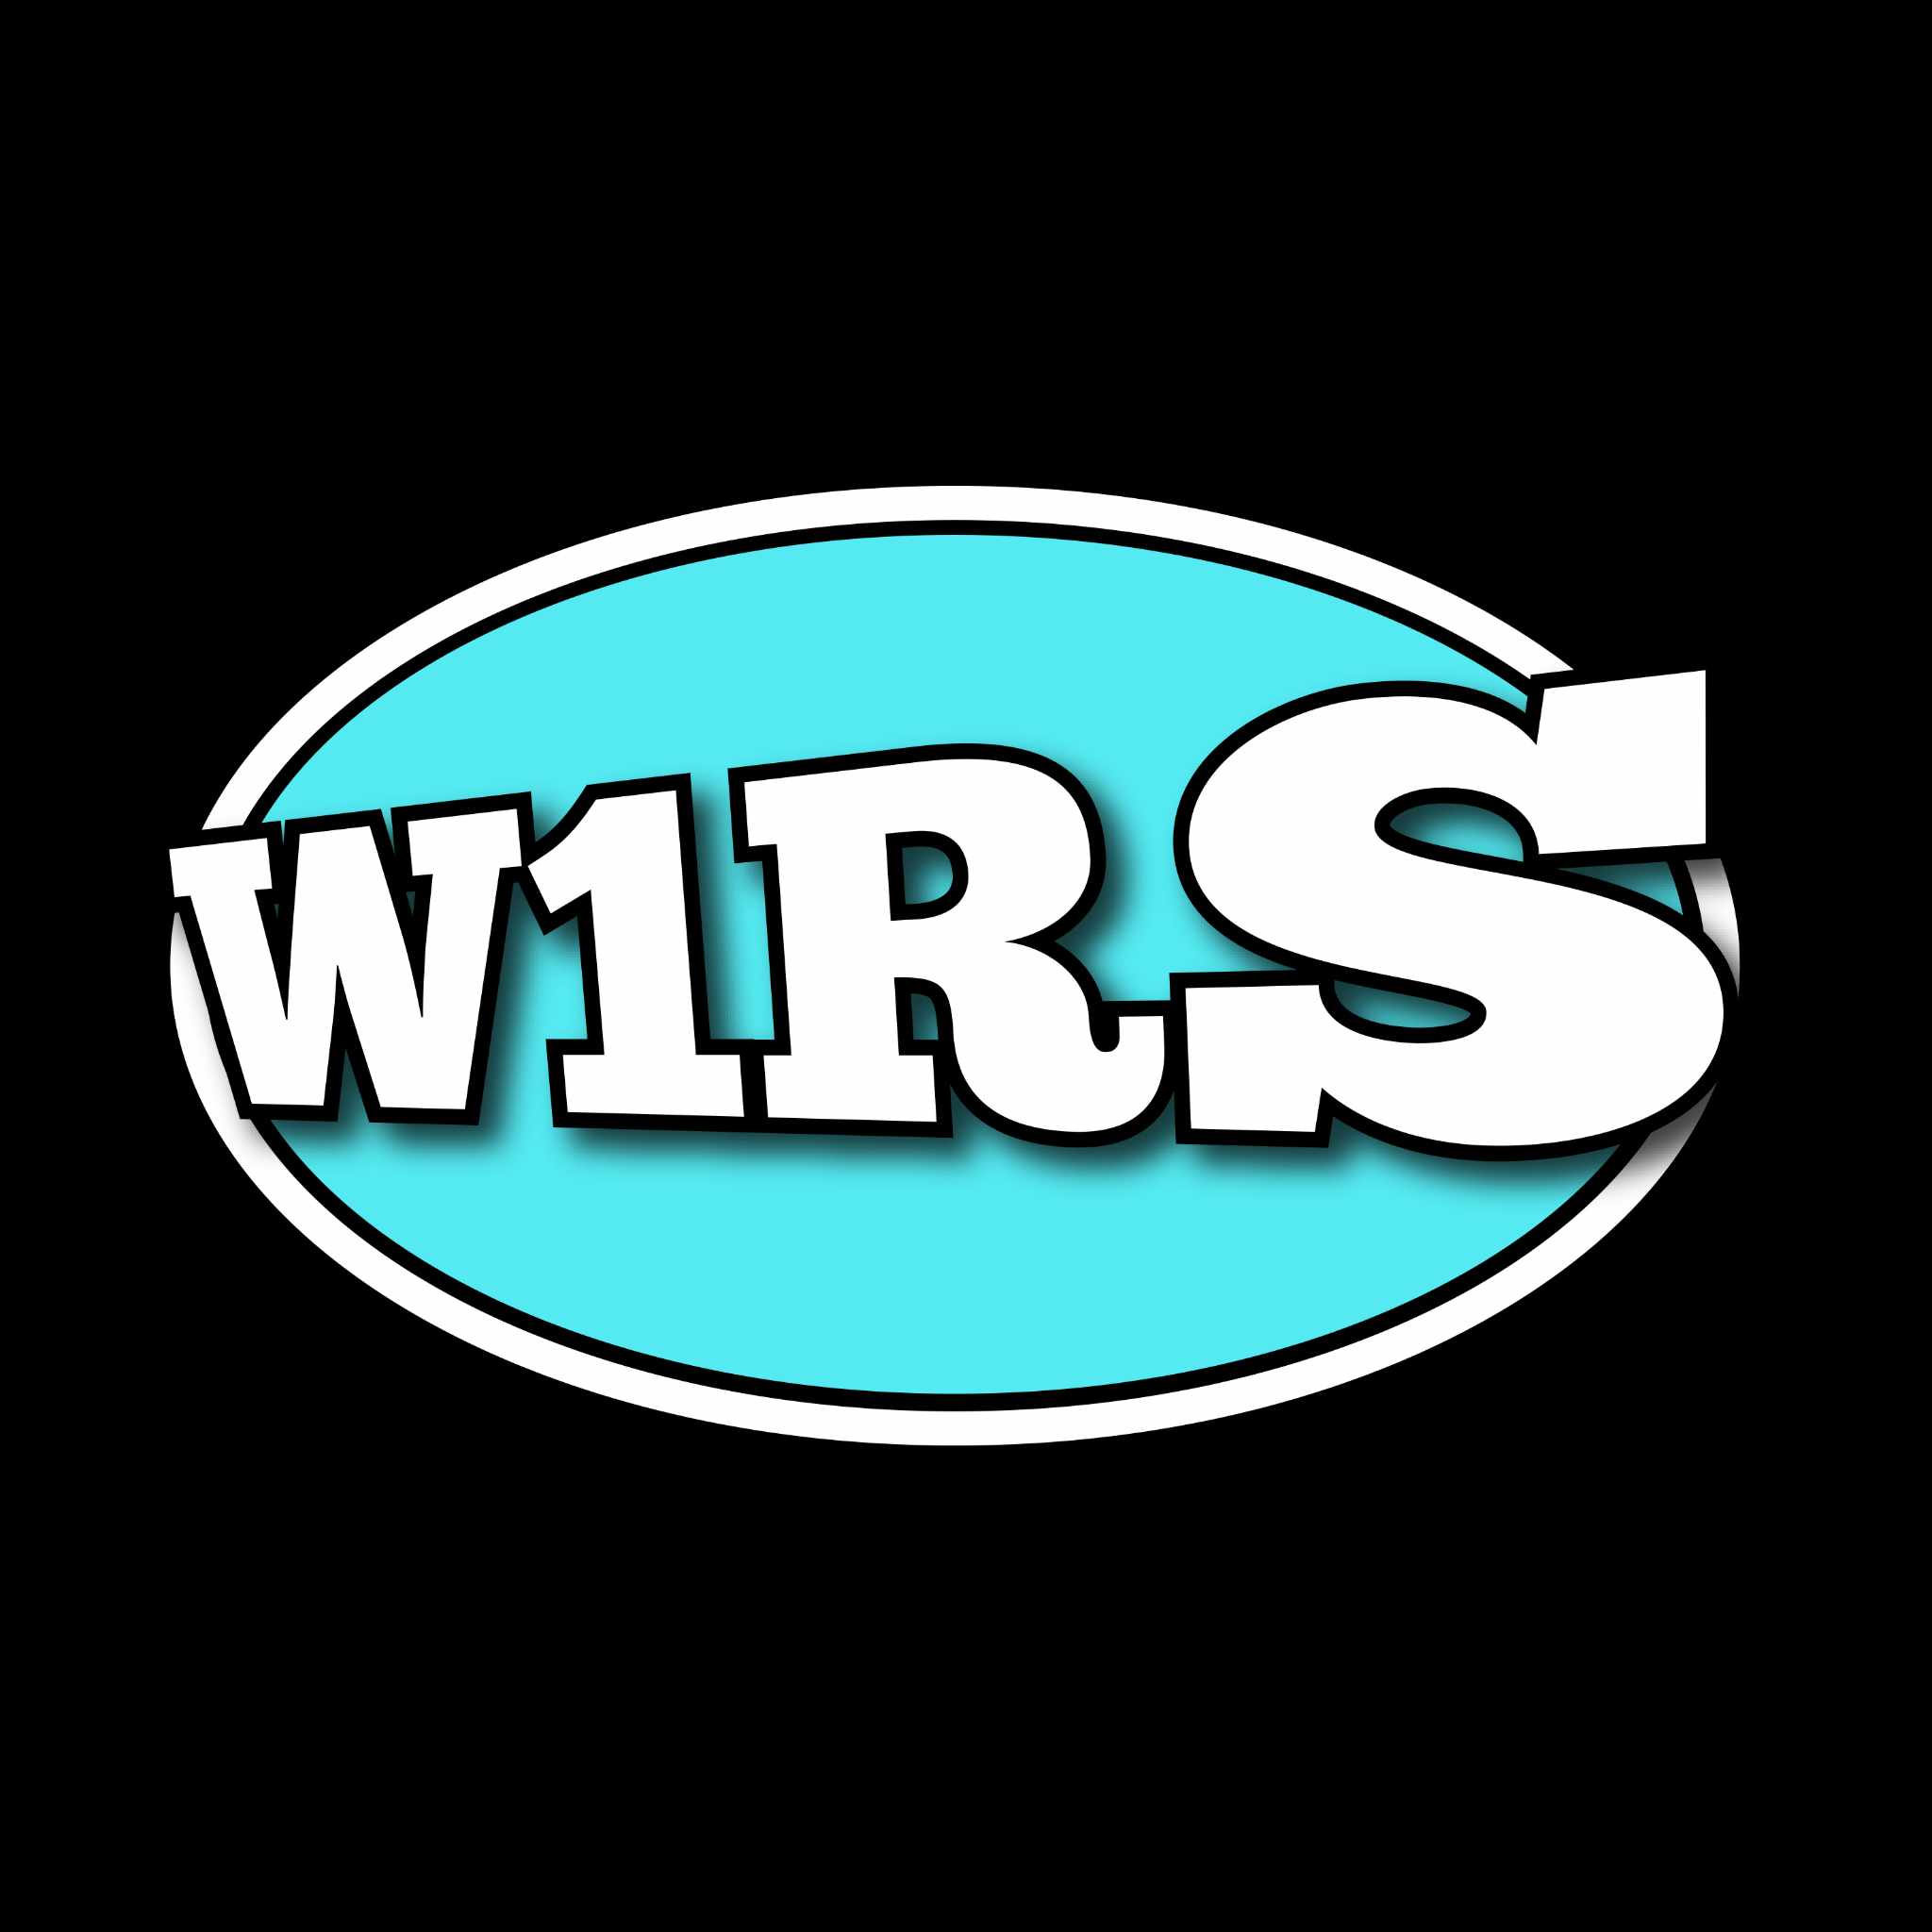 W1RS Radio